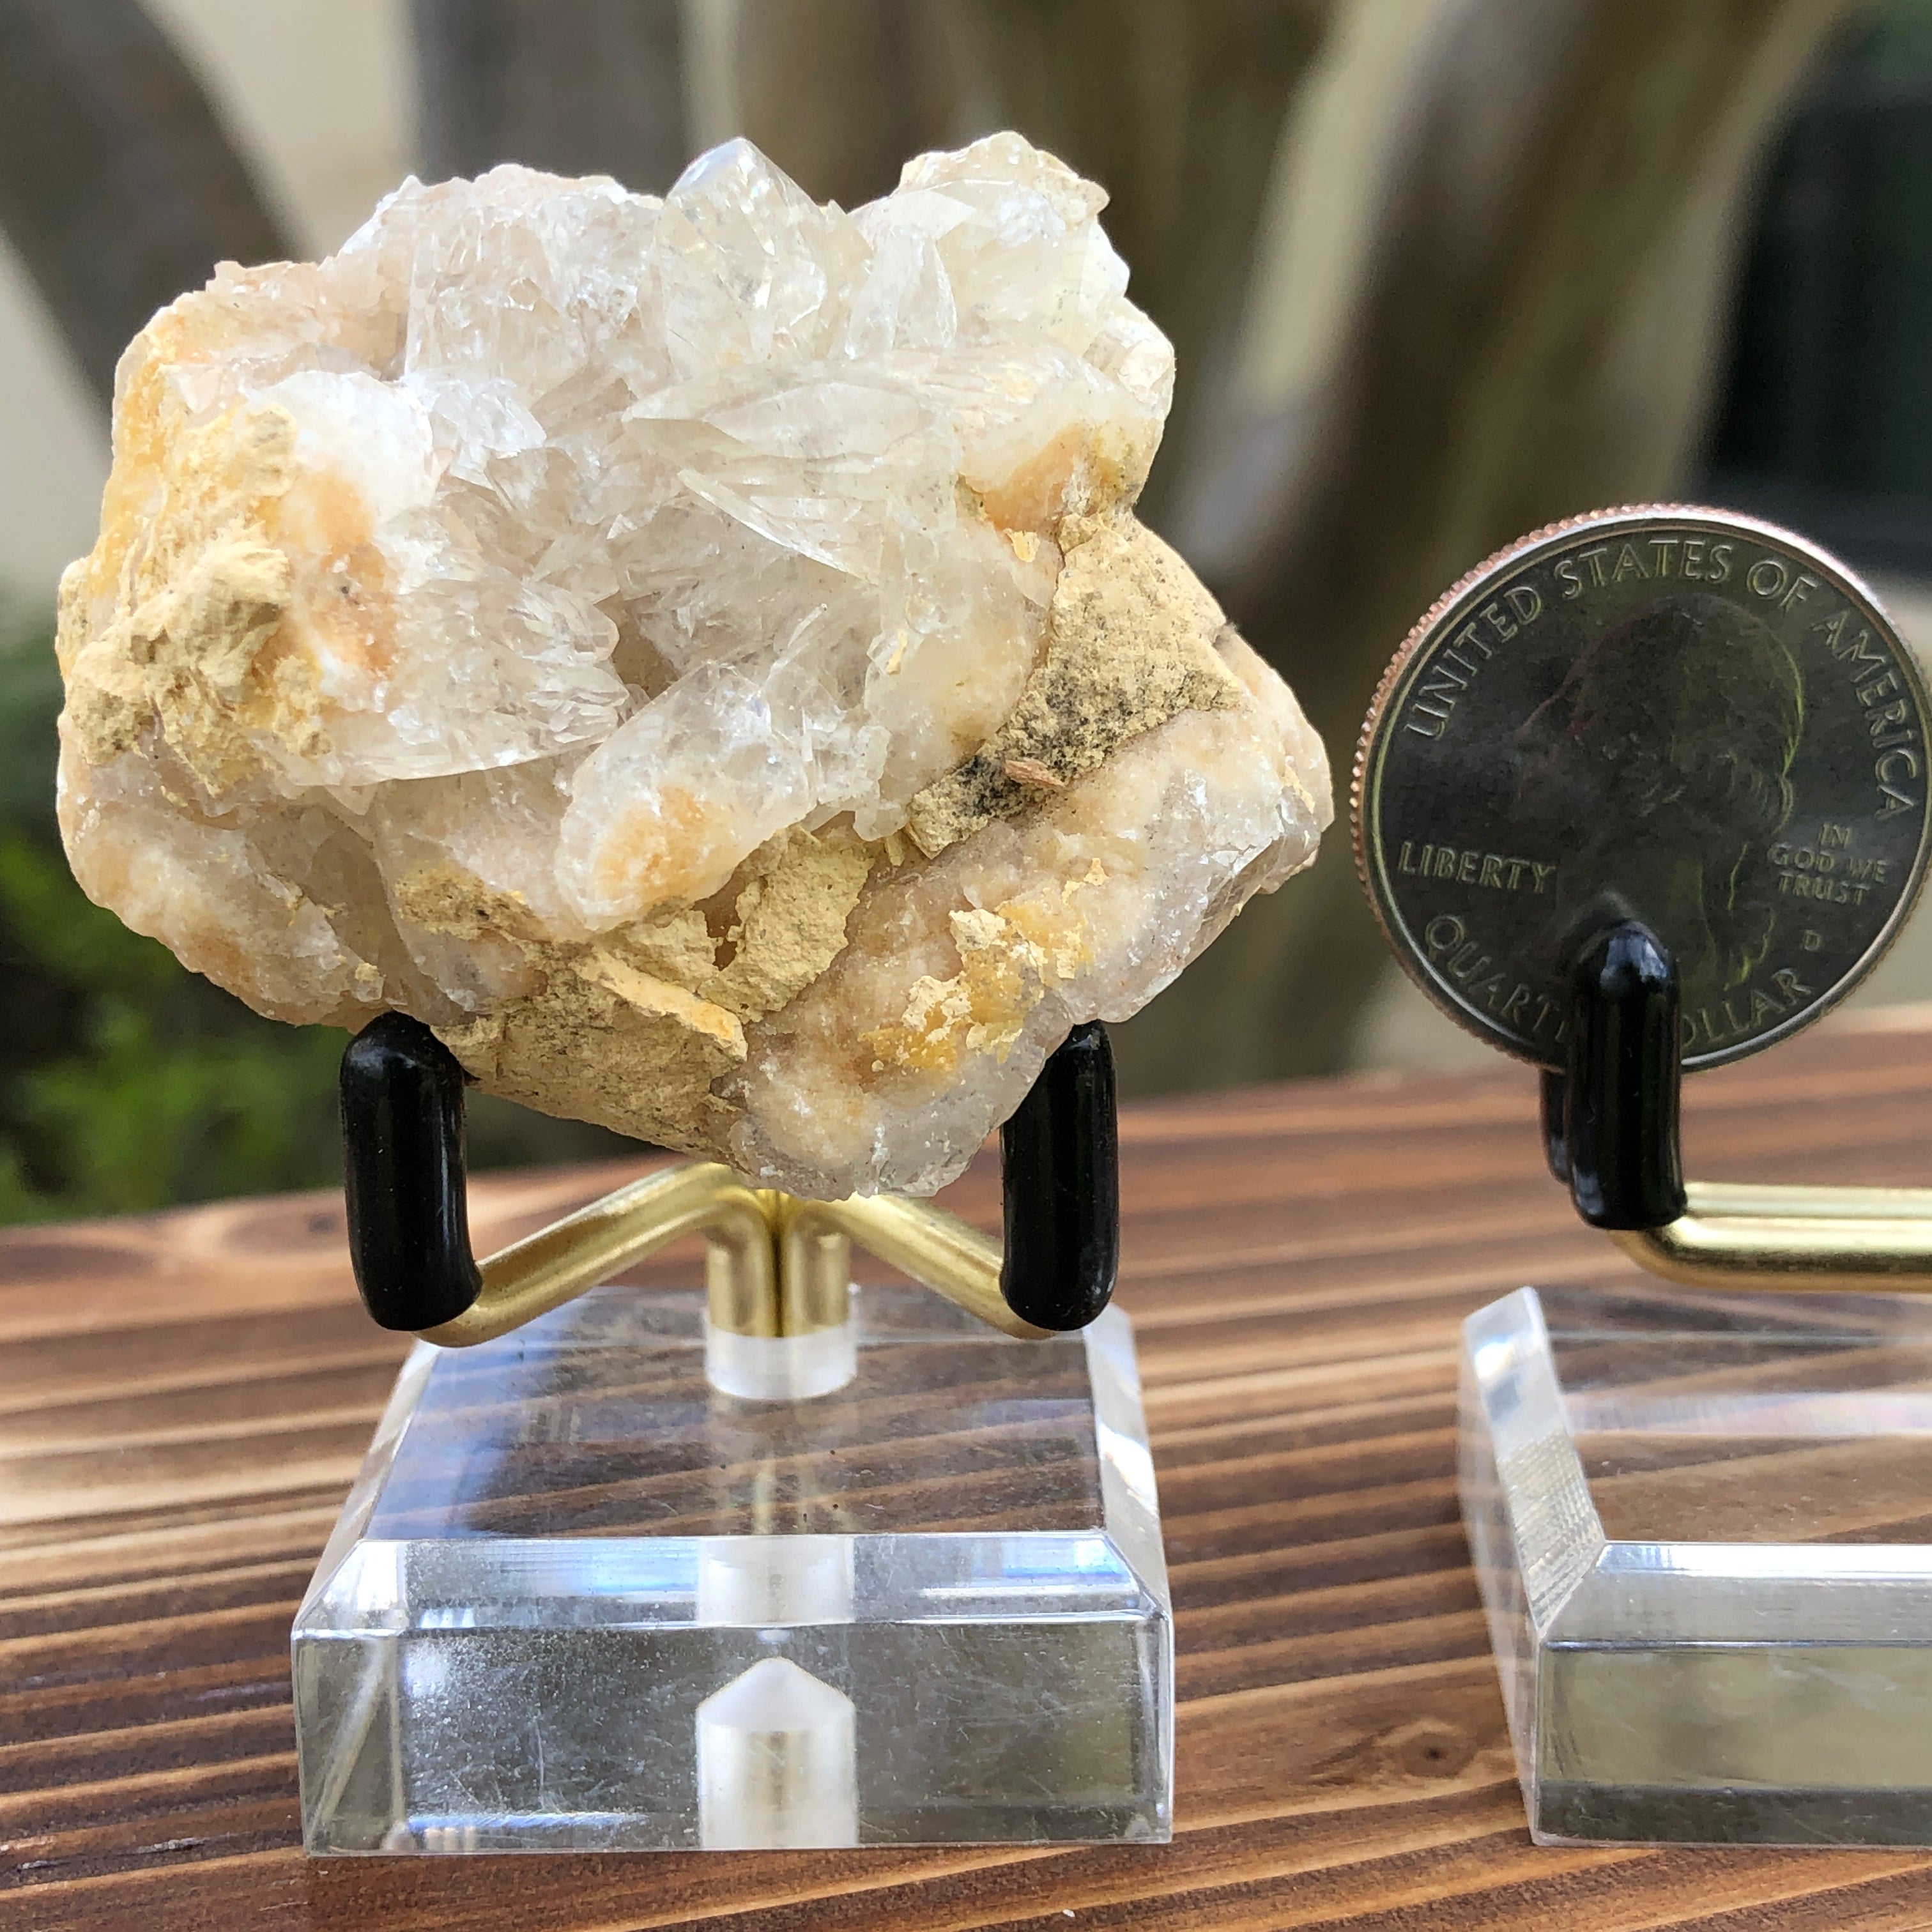 60g 1.7x1.7x1.3cm White Calcite Geode  from Brazil